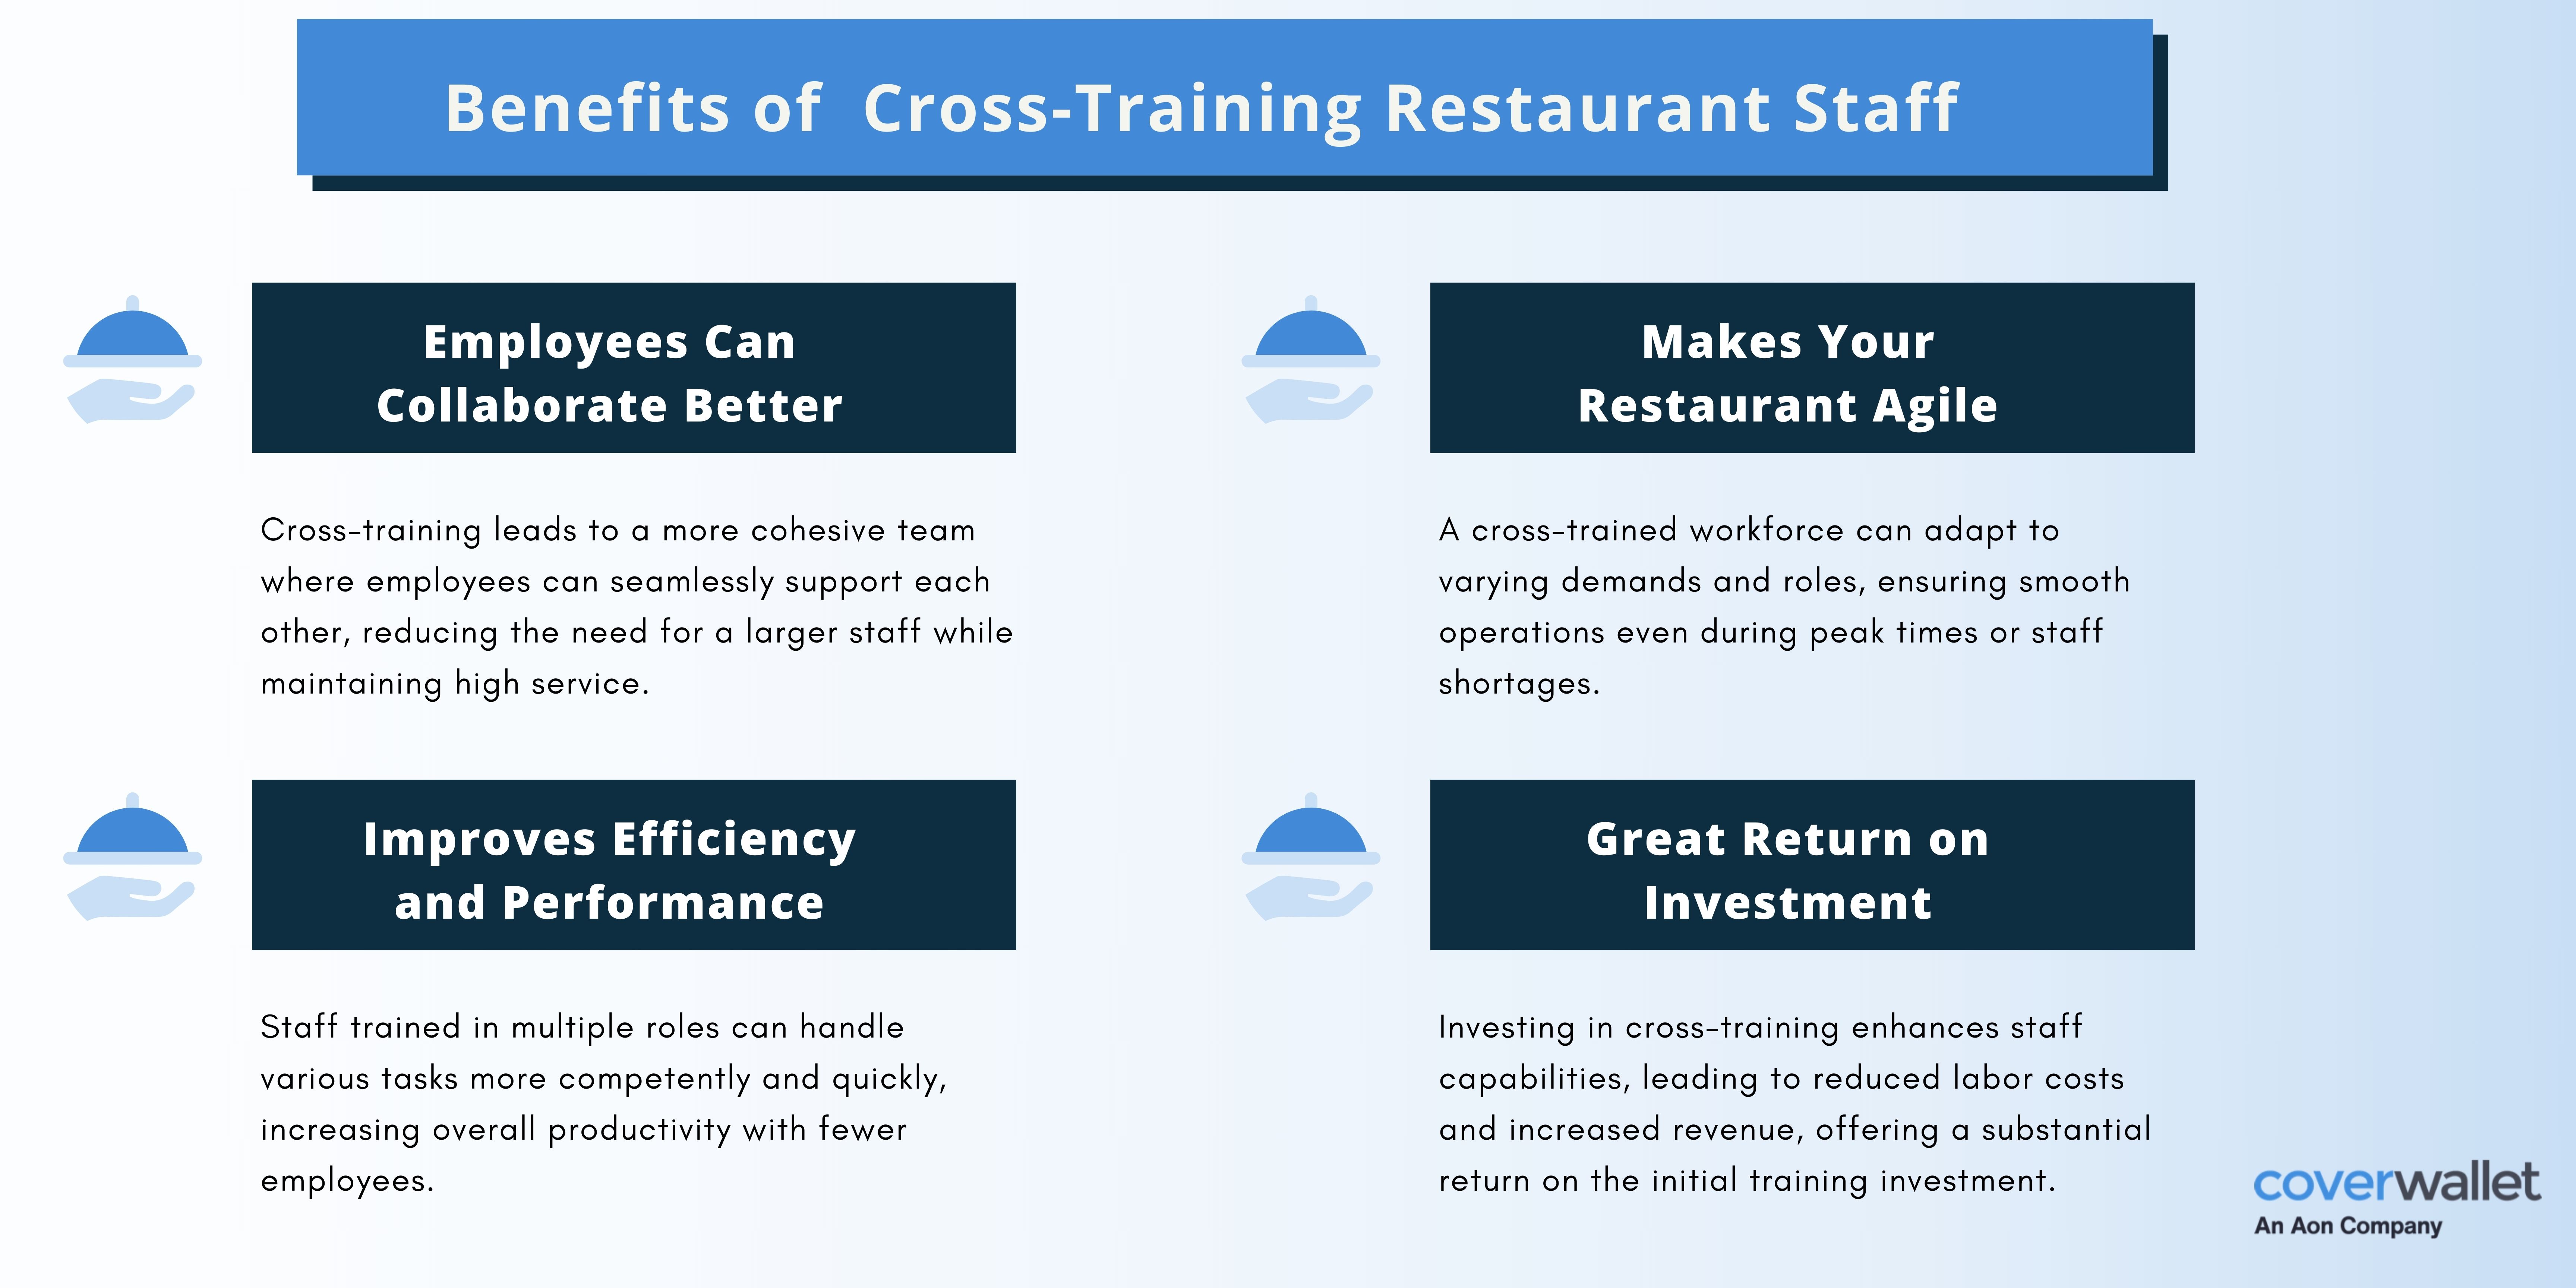 [INFOGRAPHIC] Benefits of cross-training restaurant staff